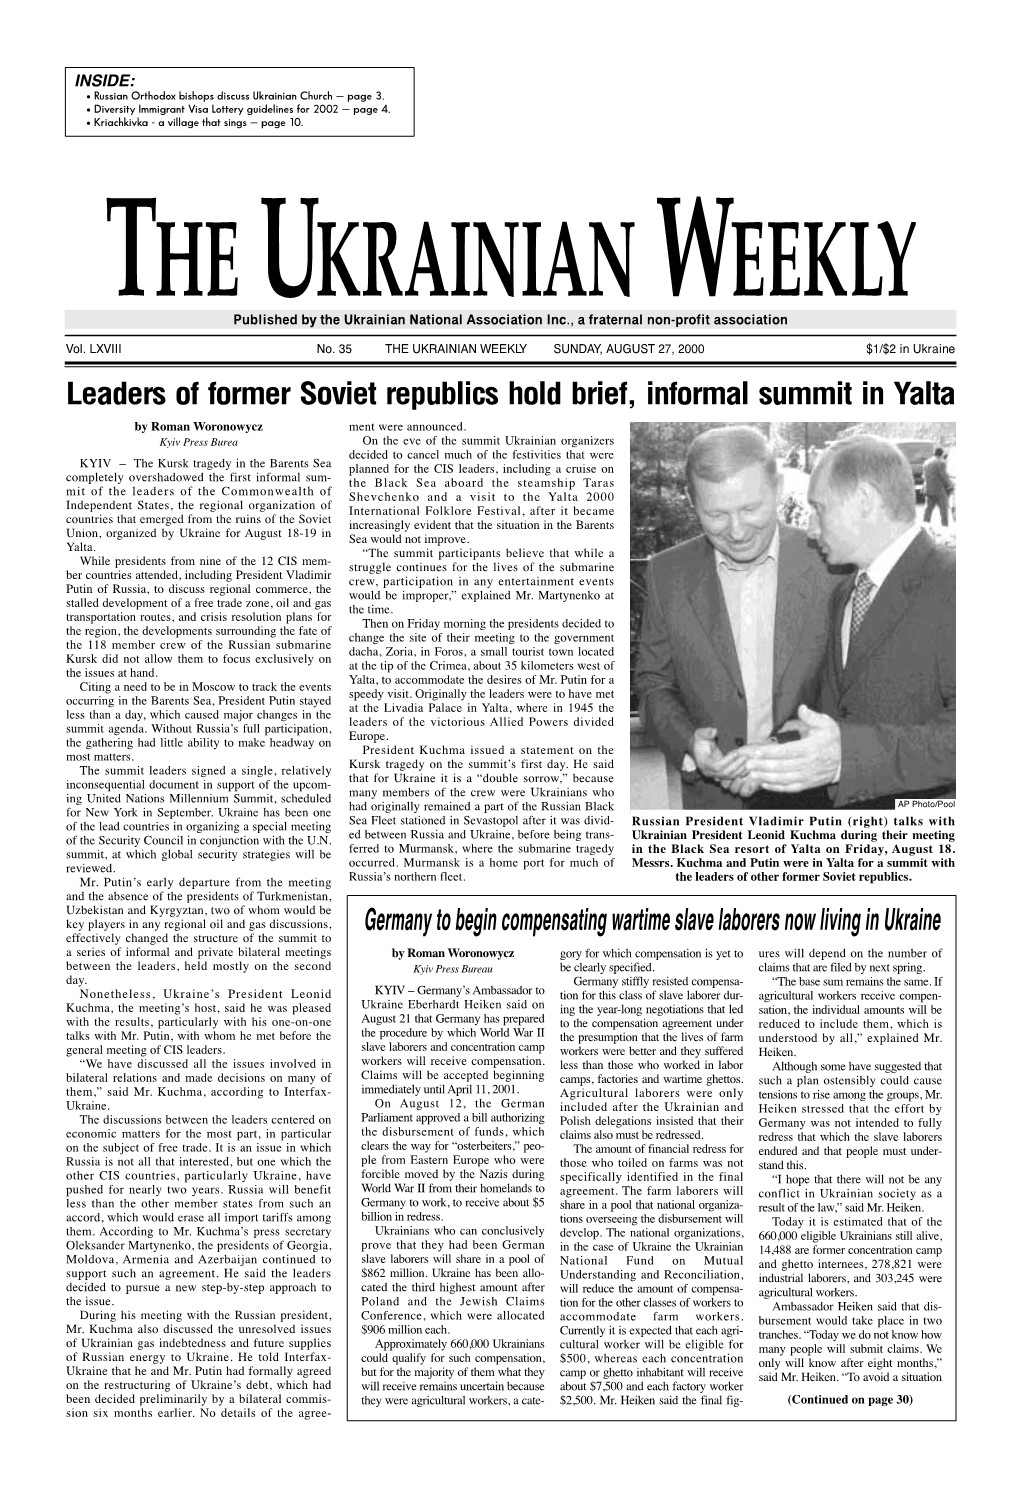 The Ukrainian Weekly 2000, No.35